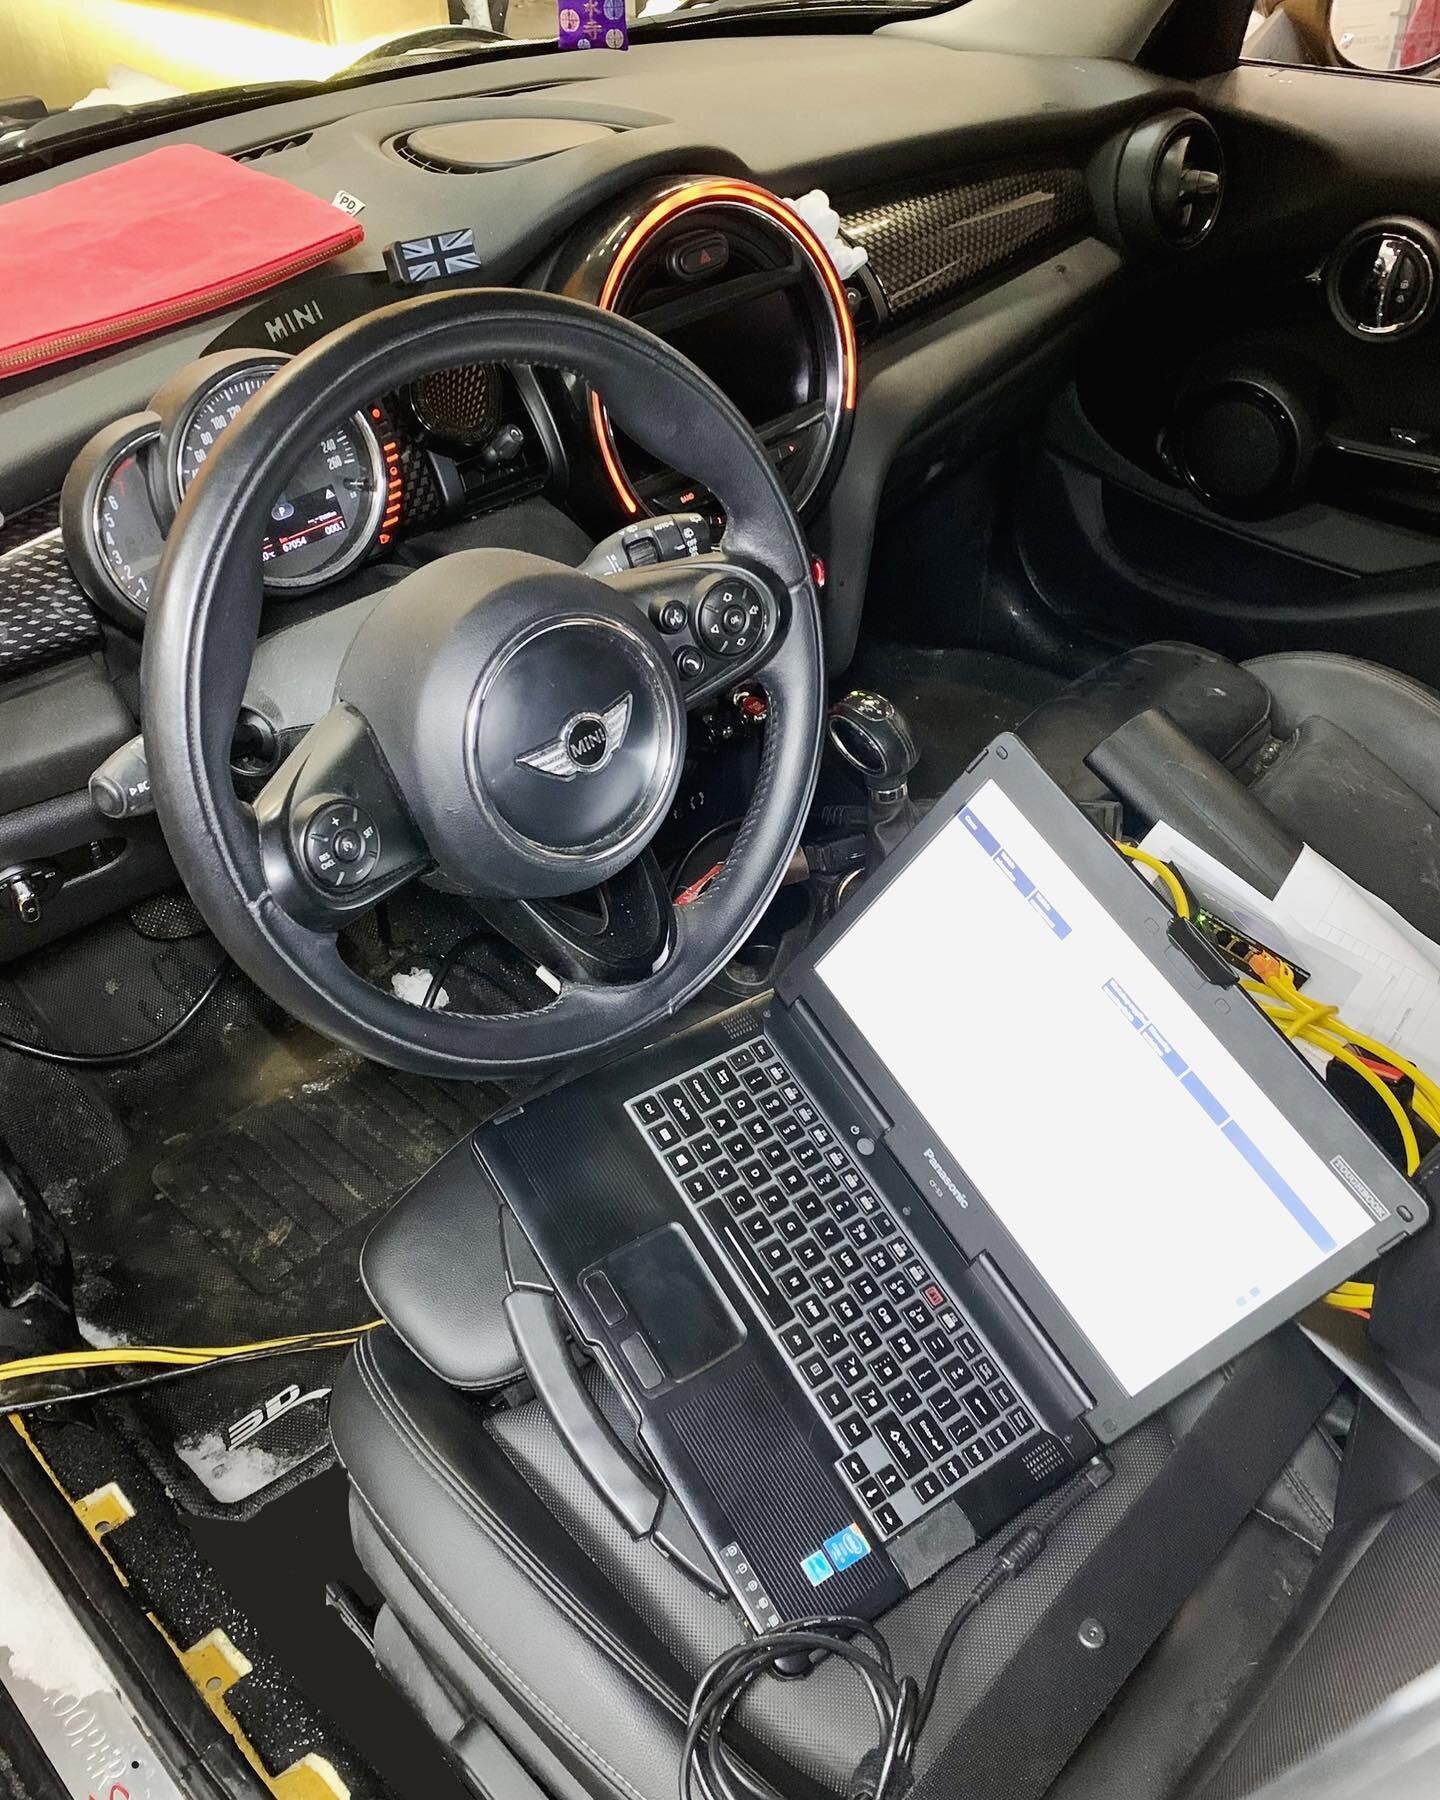 F55 Mini I-Level update after replacement module installed.

#BMW #minicooper #ISTA #moduleprogramming #eurocar #mini #automotive #automotivediagnostics #panasonic #localottawa